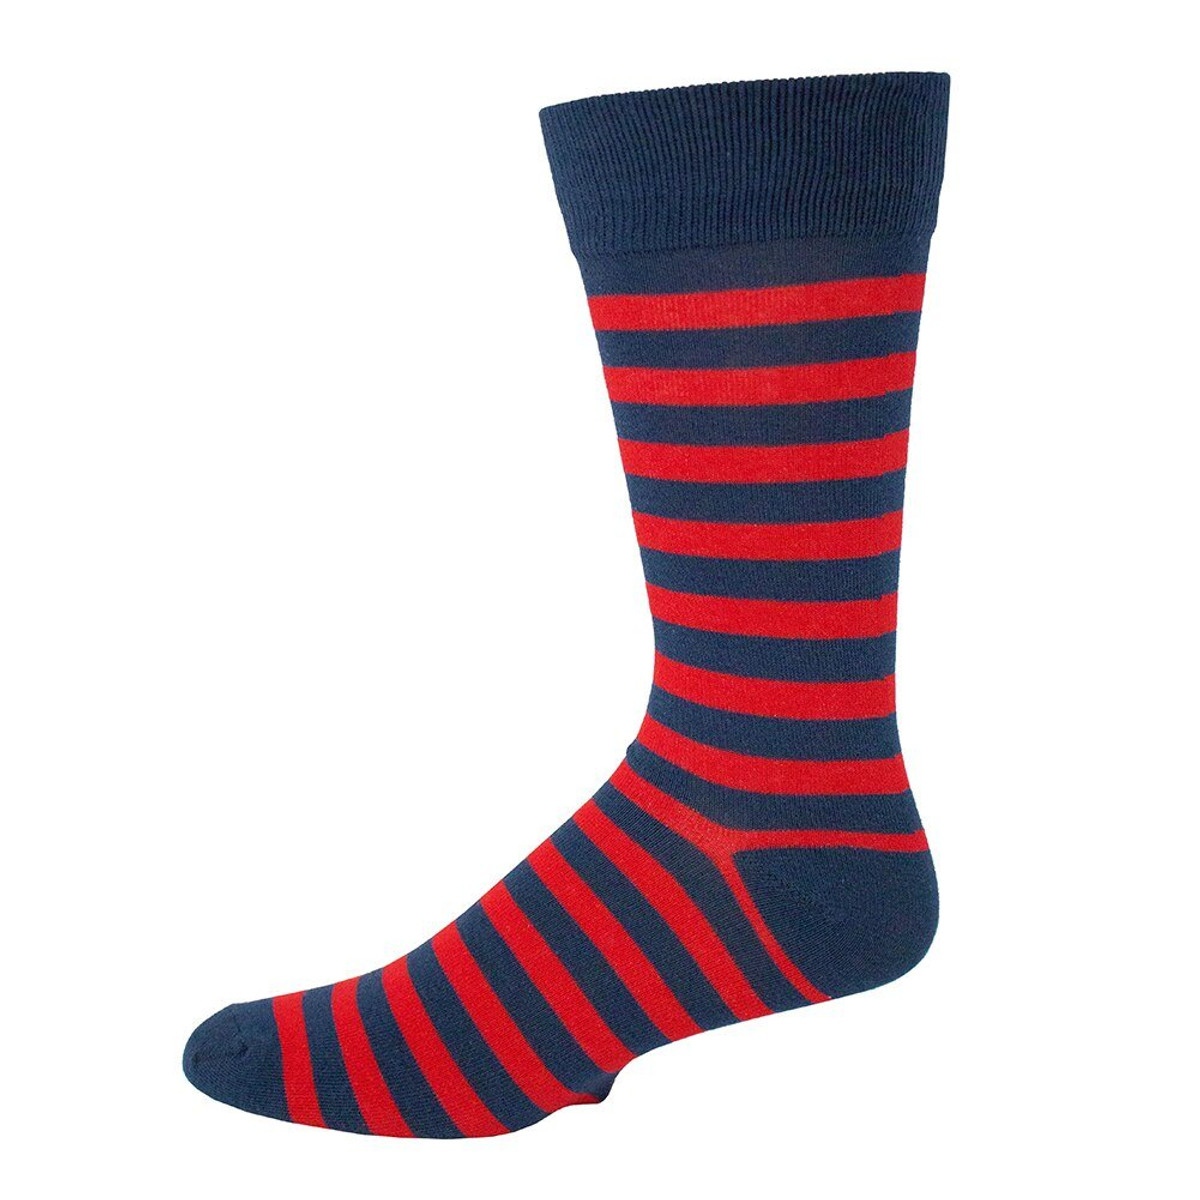 Men's College Striped Crew Dress Socks - Navy Red